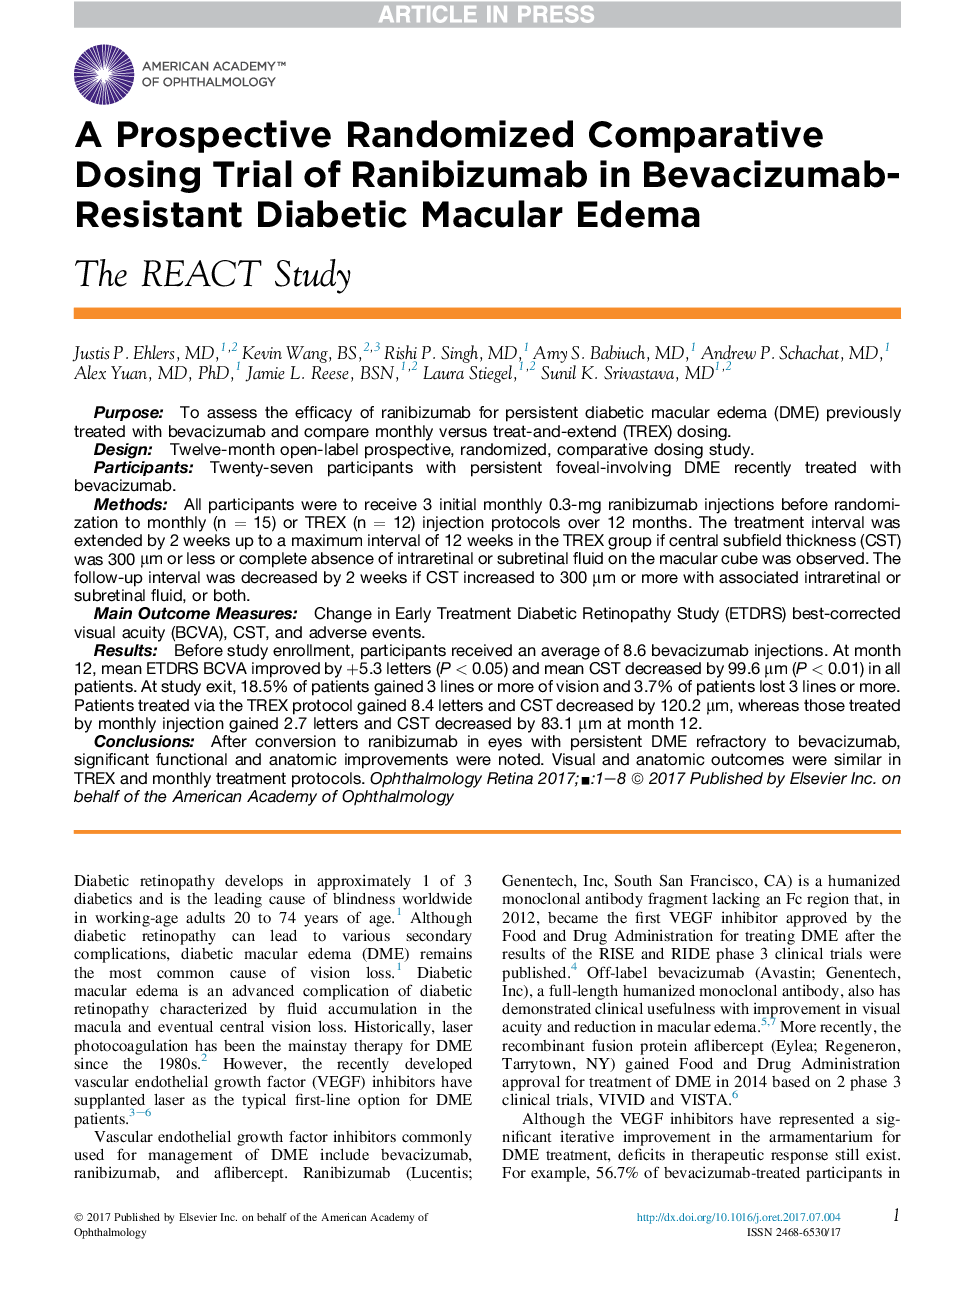 A Prospective Randomized Comparative Dosing Trial of Ranibizumab in Bevacizumab-Resistant Diabetic Macular Edema